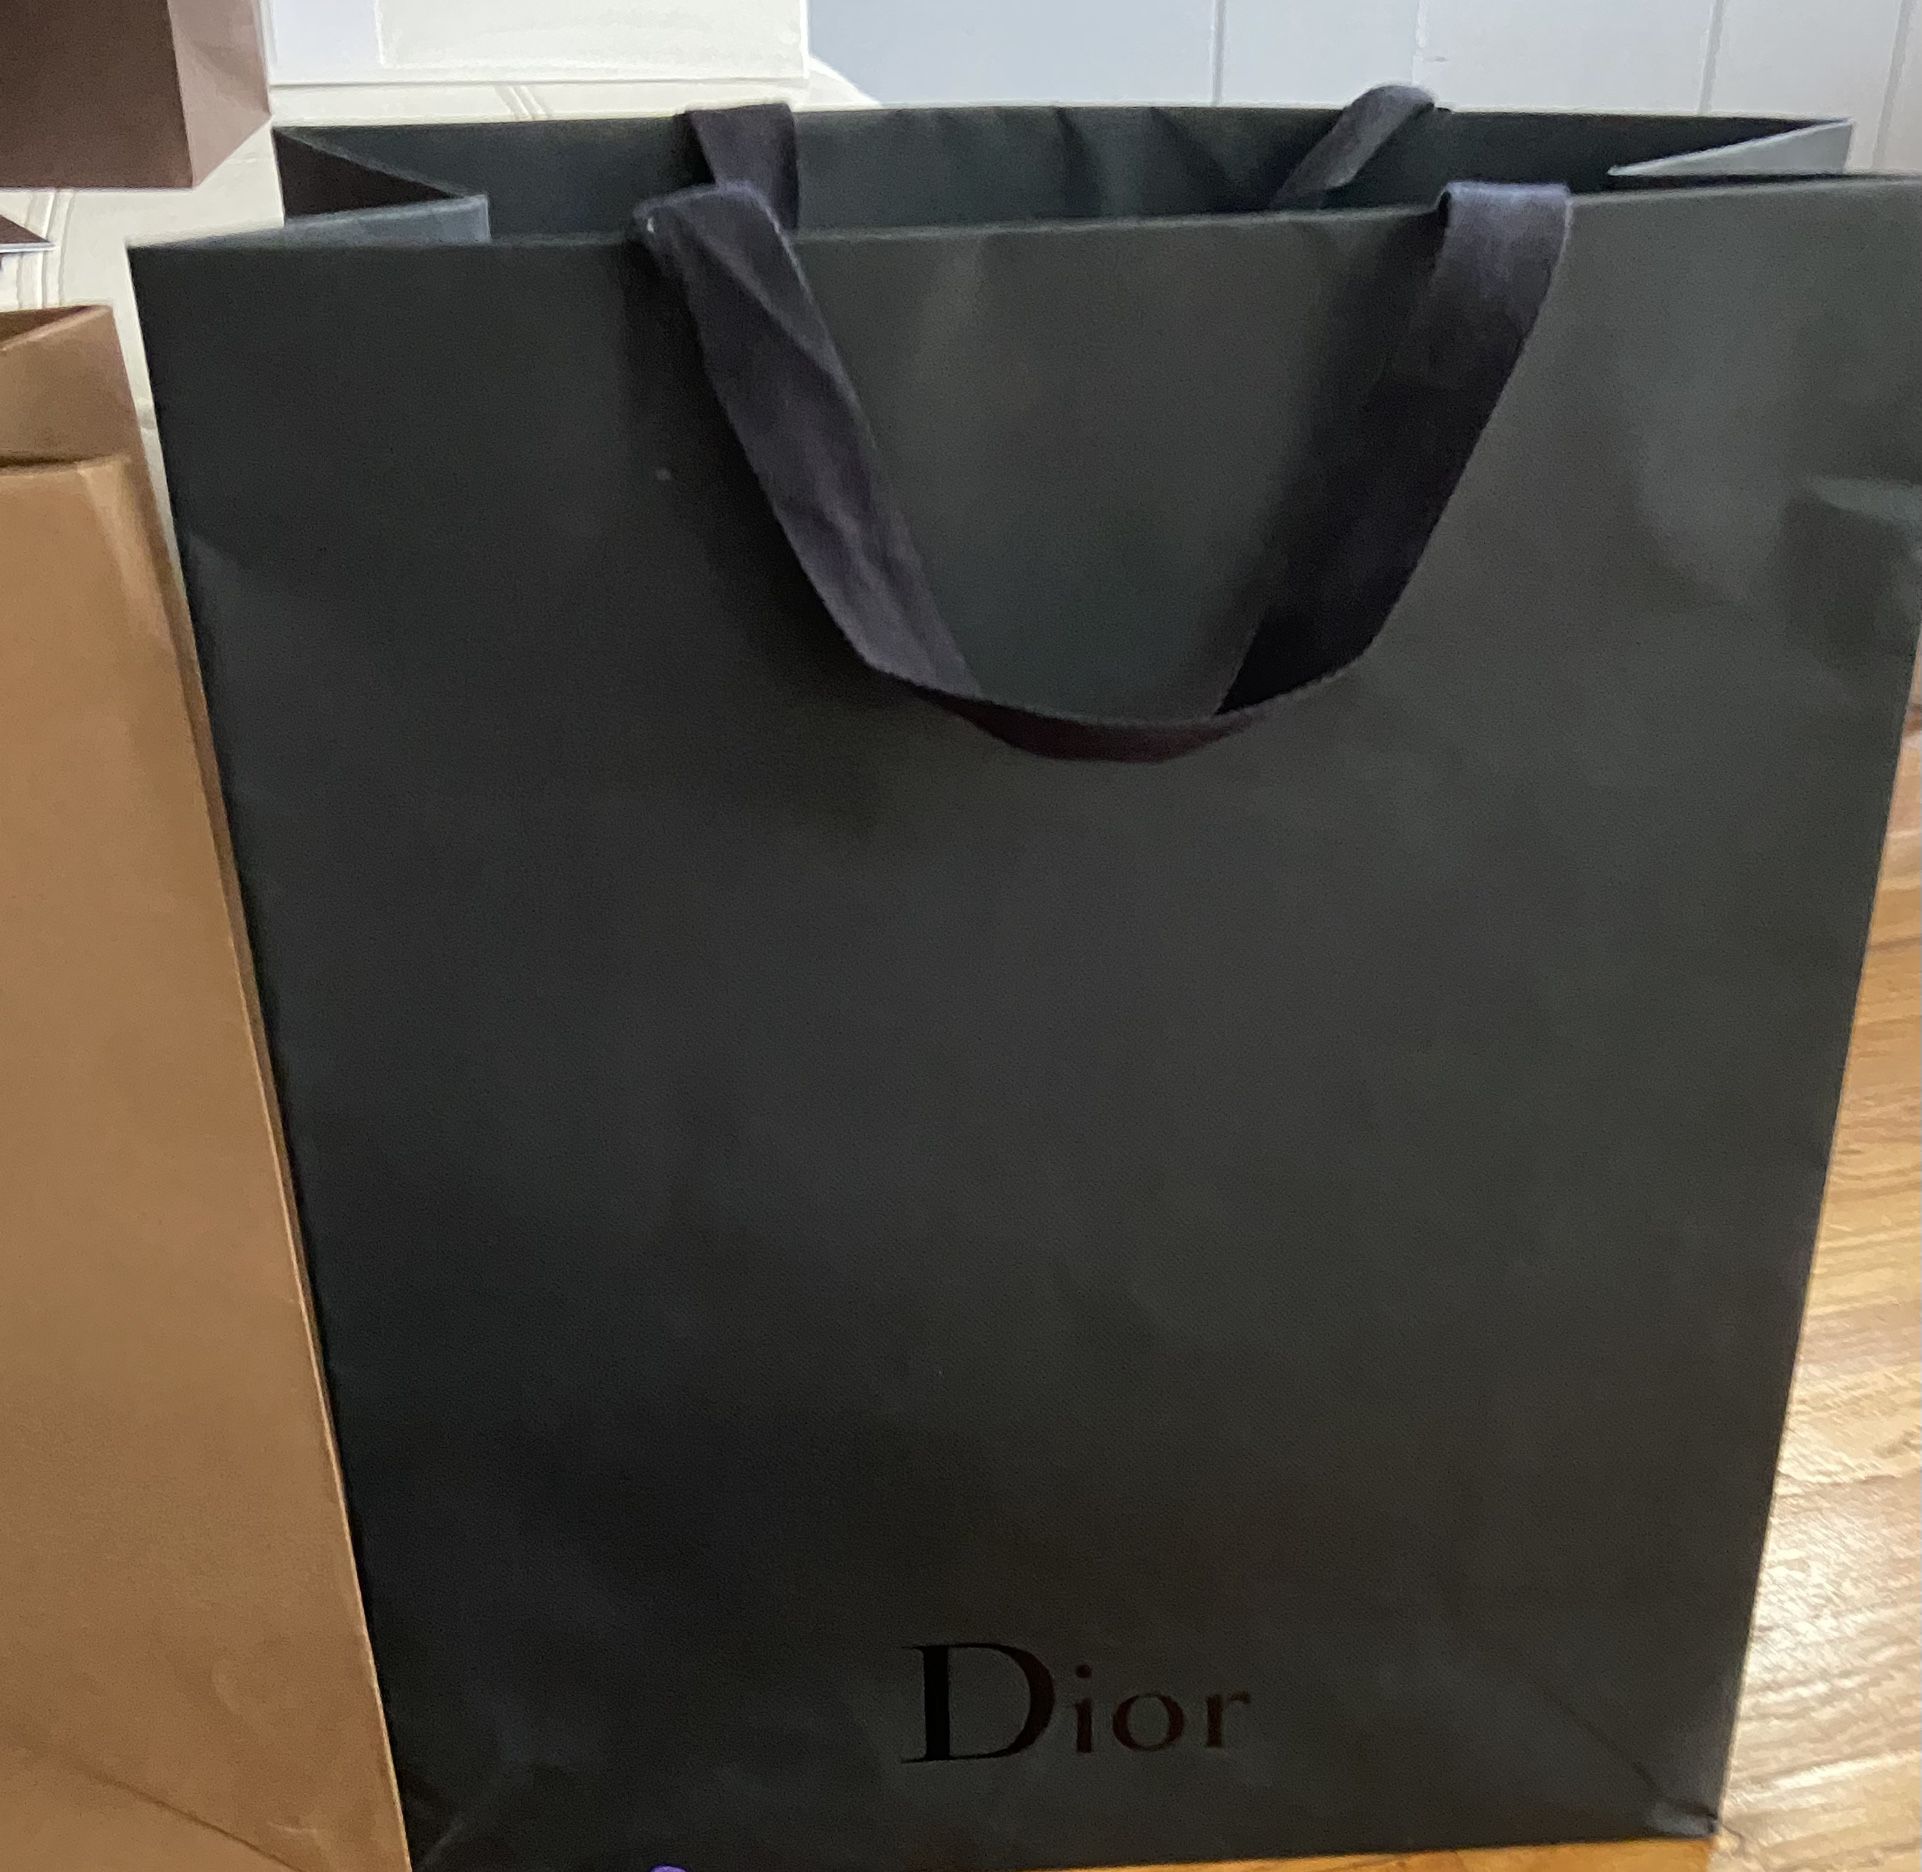 Luxury Brand Shopping Gift Paper Bag Set Hermes Louis Vuitton Gucci etc.  14130 